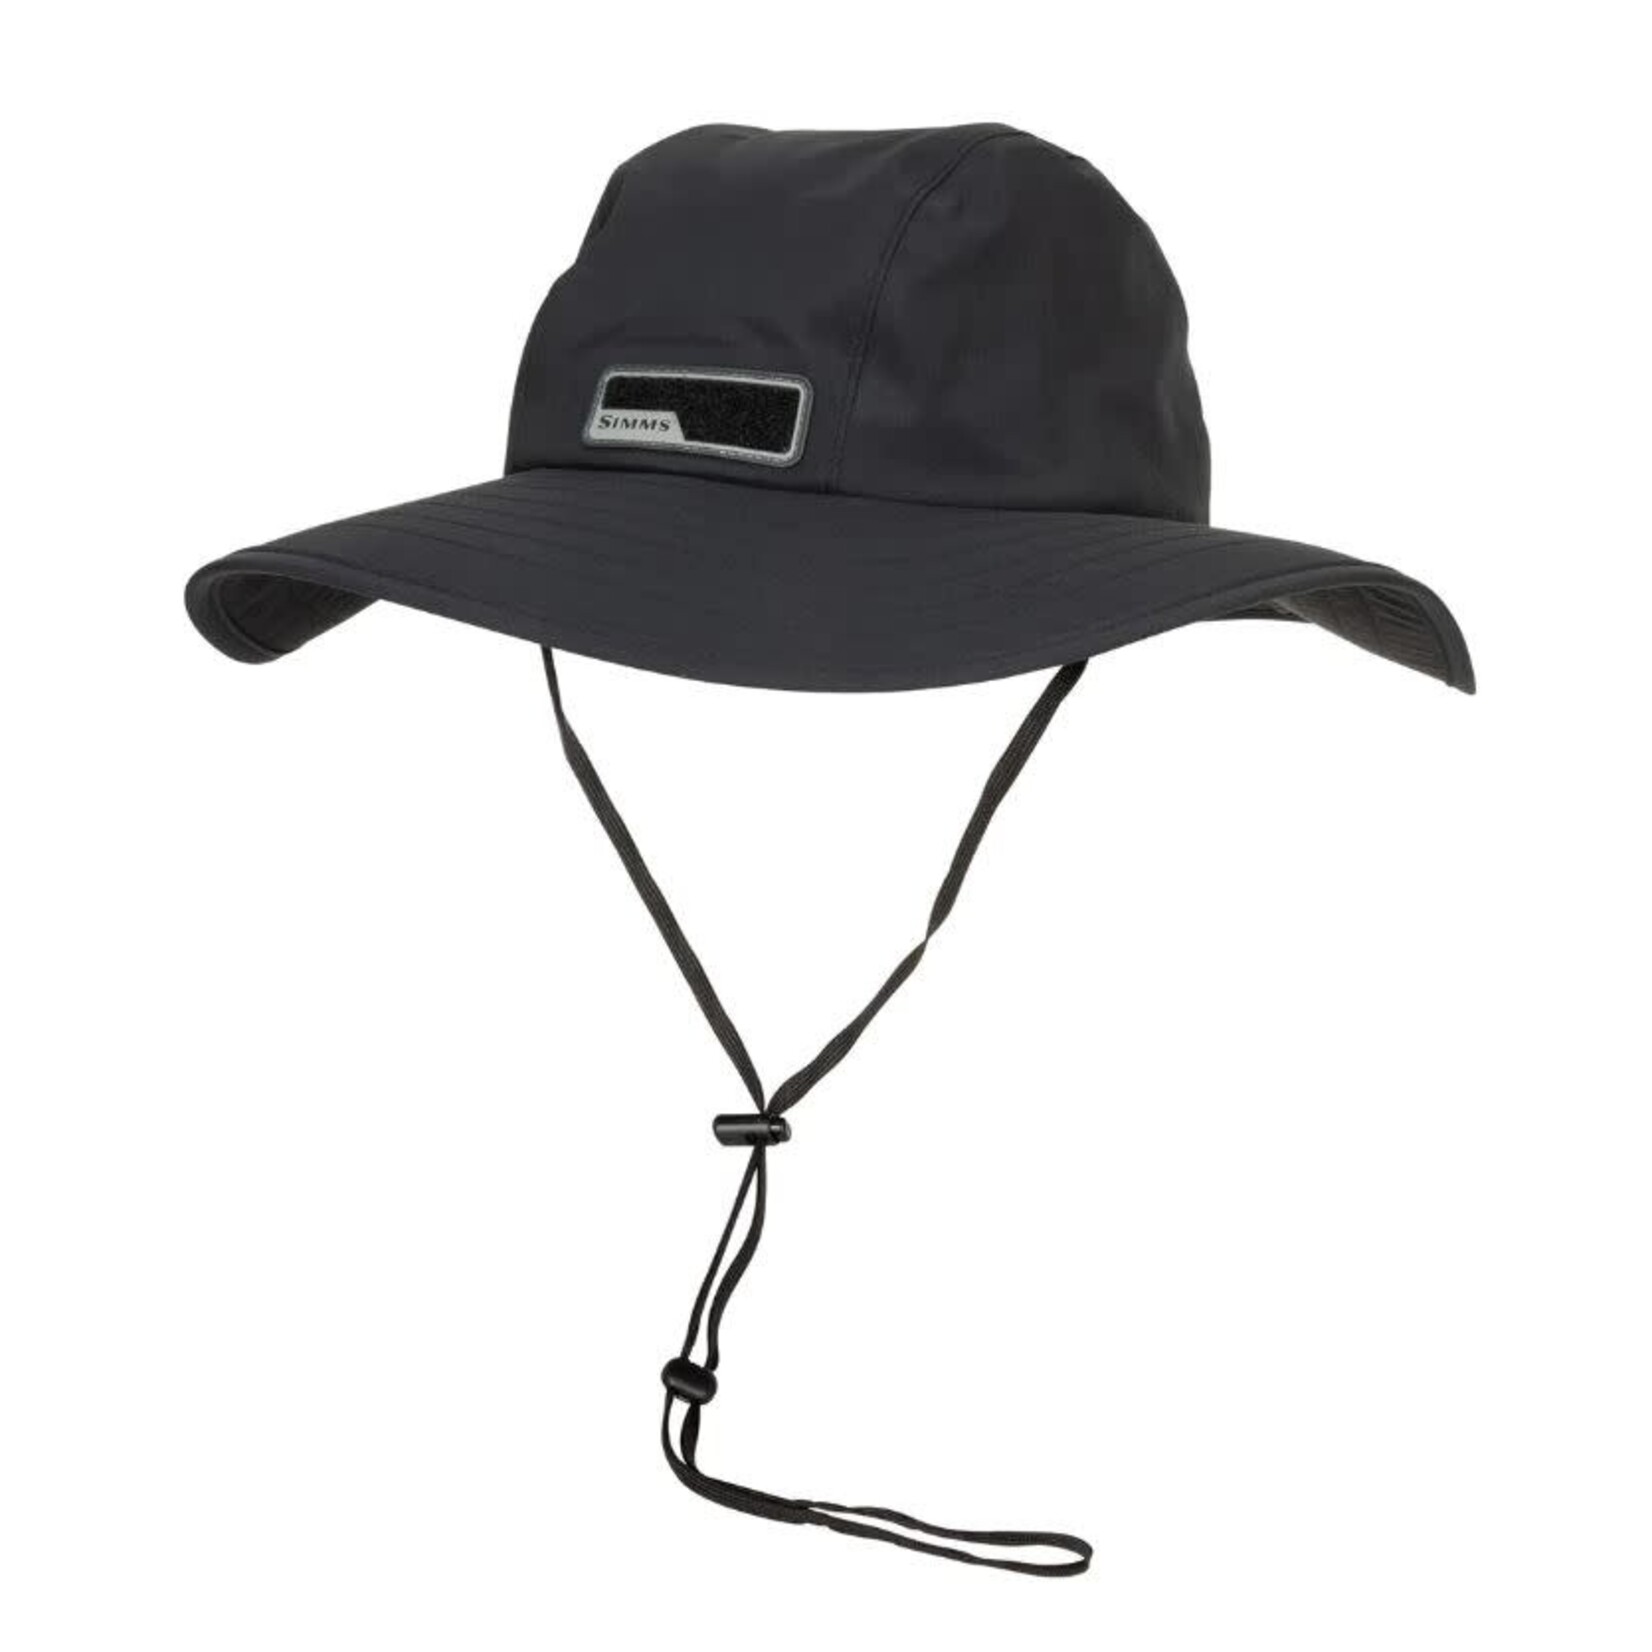 Simms Fishing GORE-TEX® Guide Sombrero - Black